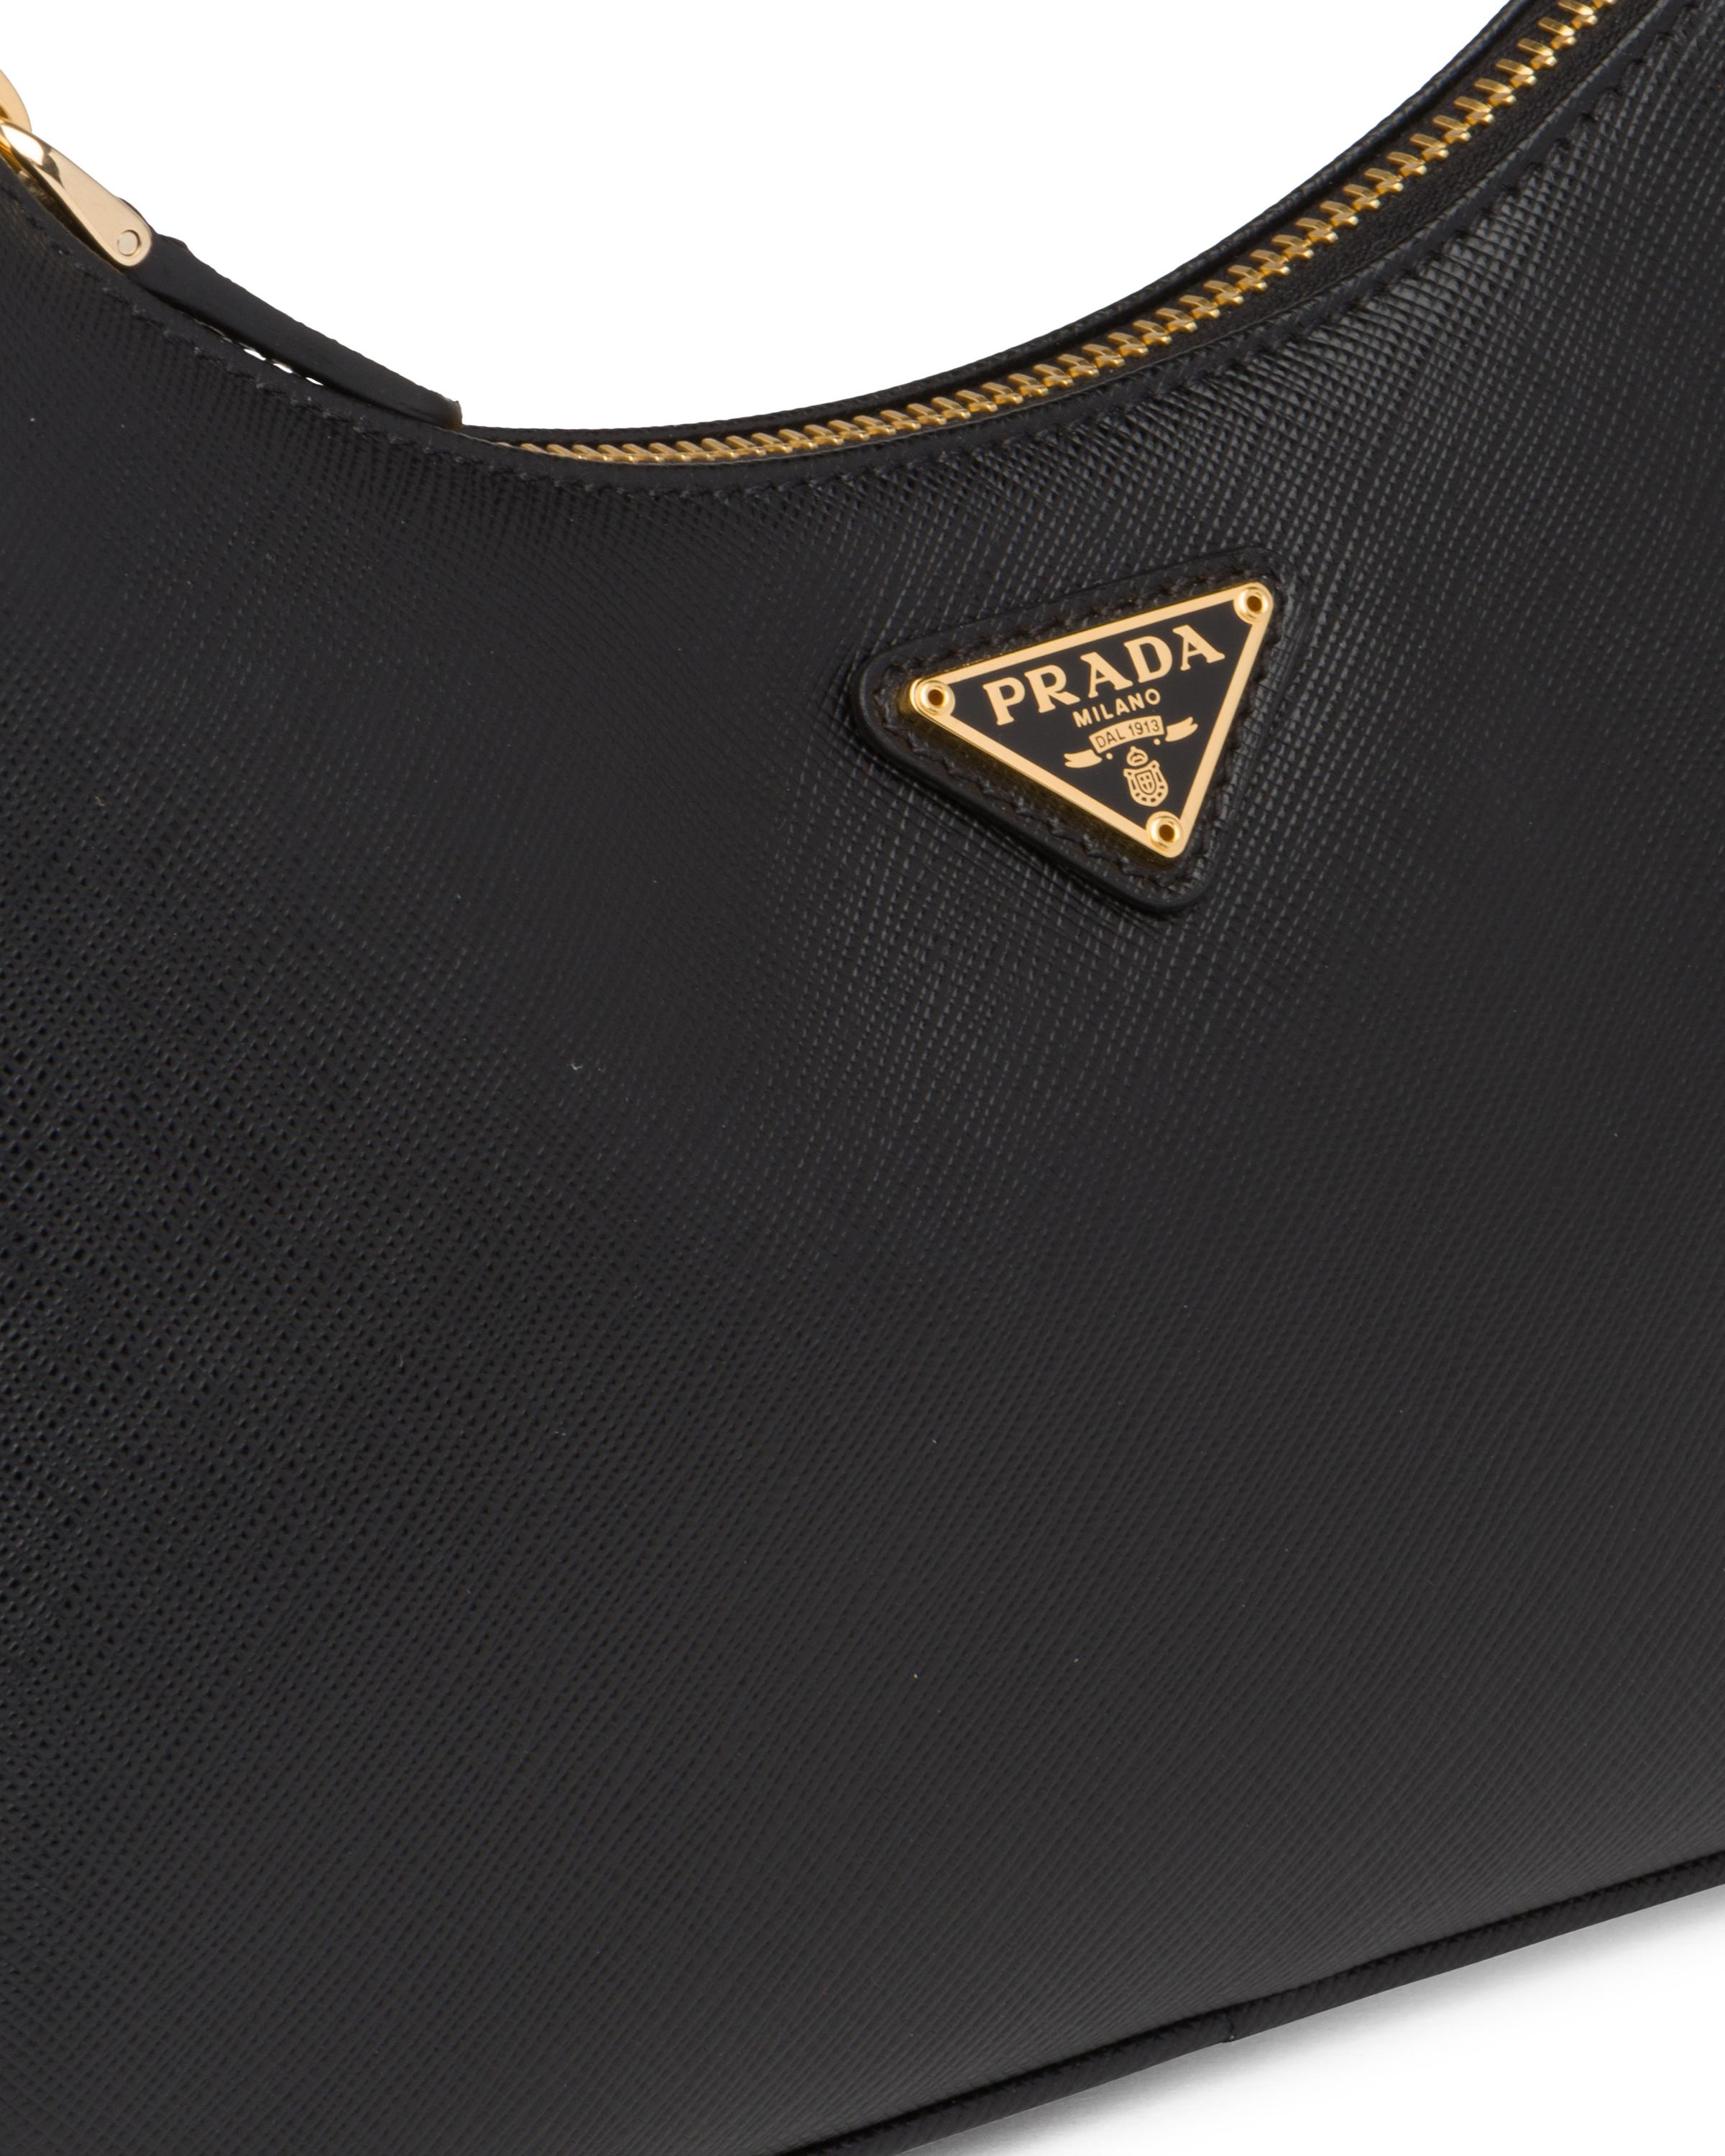 Prada Re-edition 2005 Saffiano Leather Bag in Black | Lyst